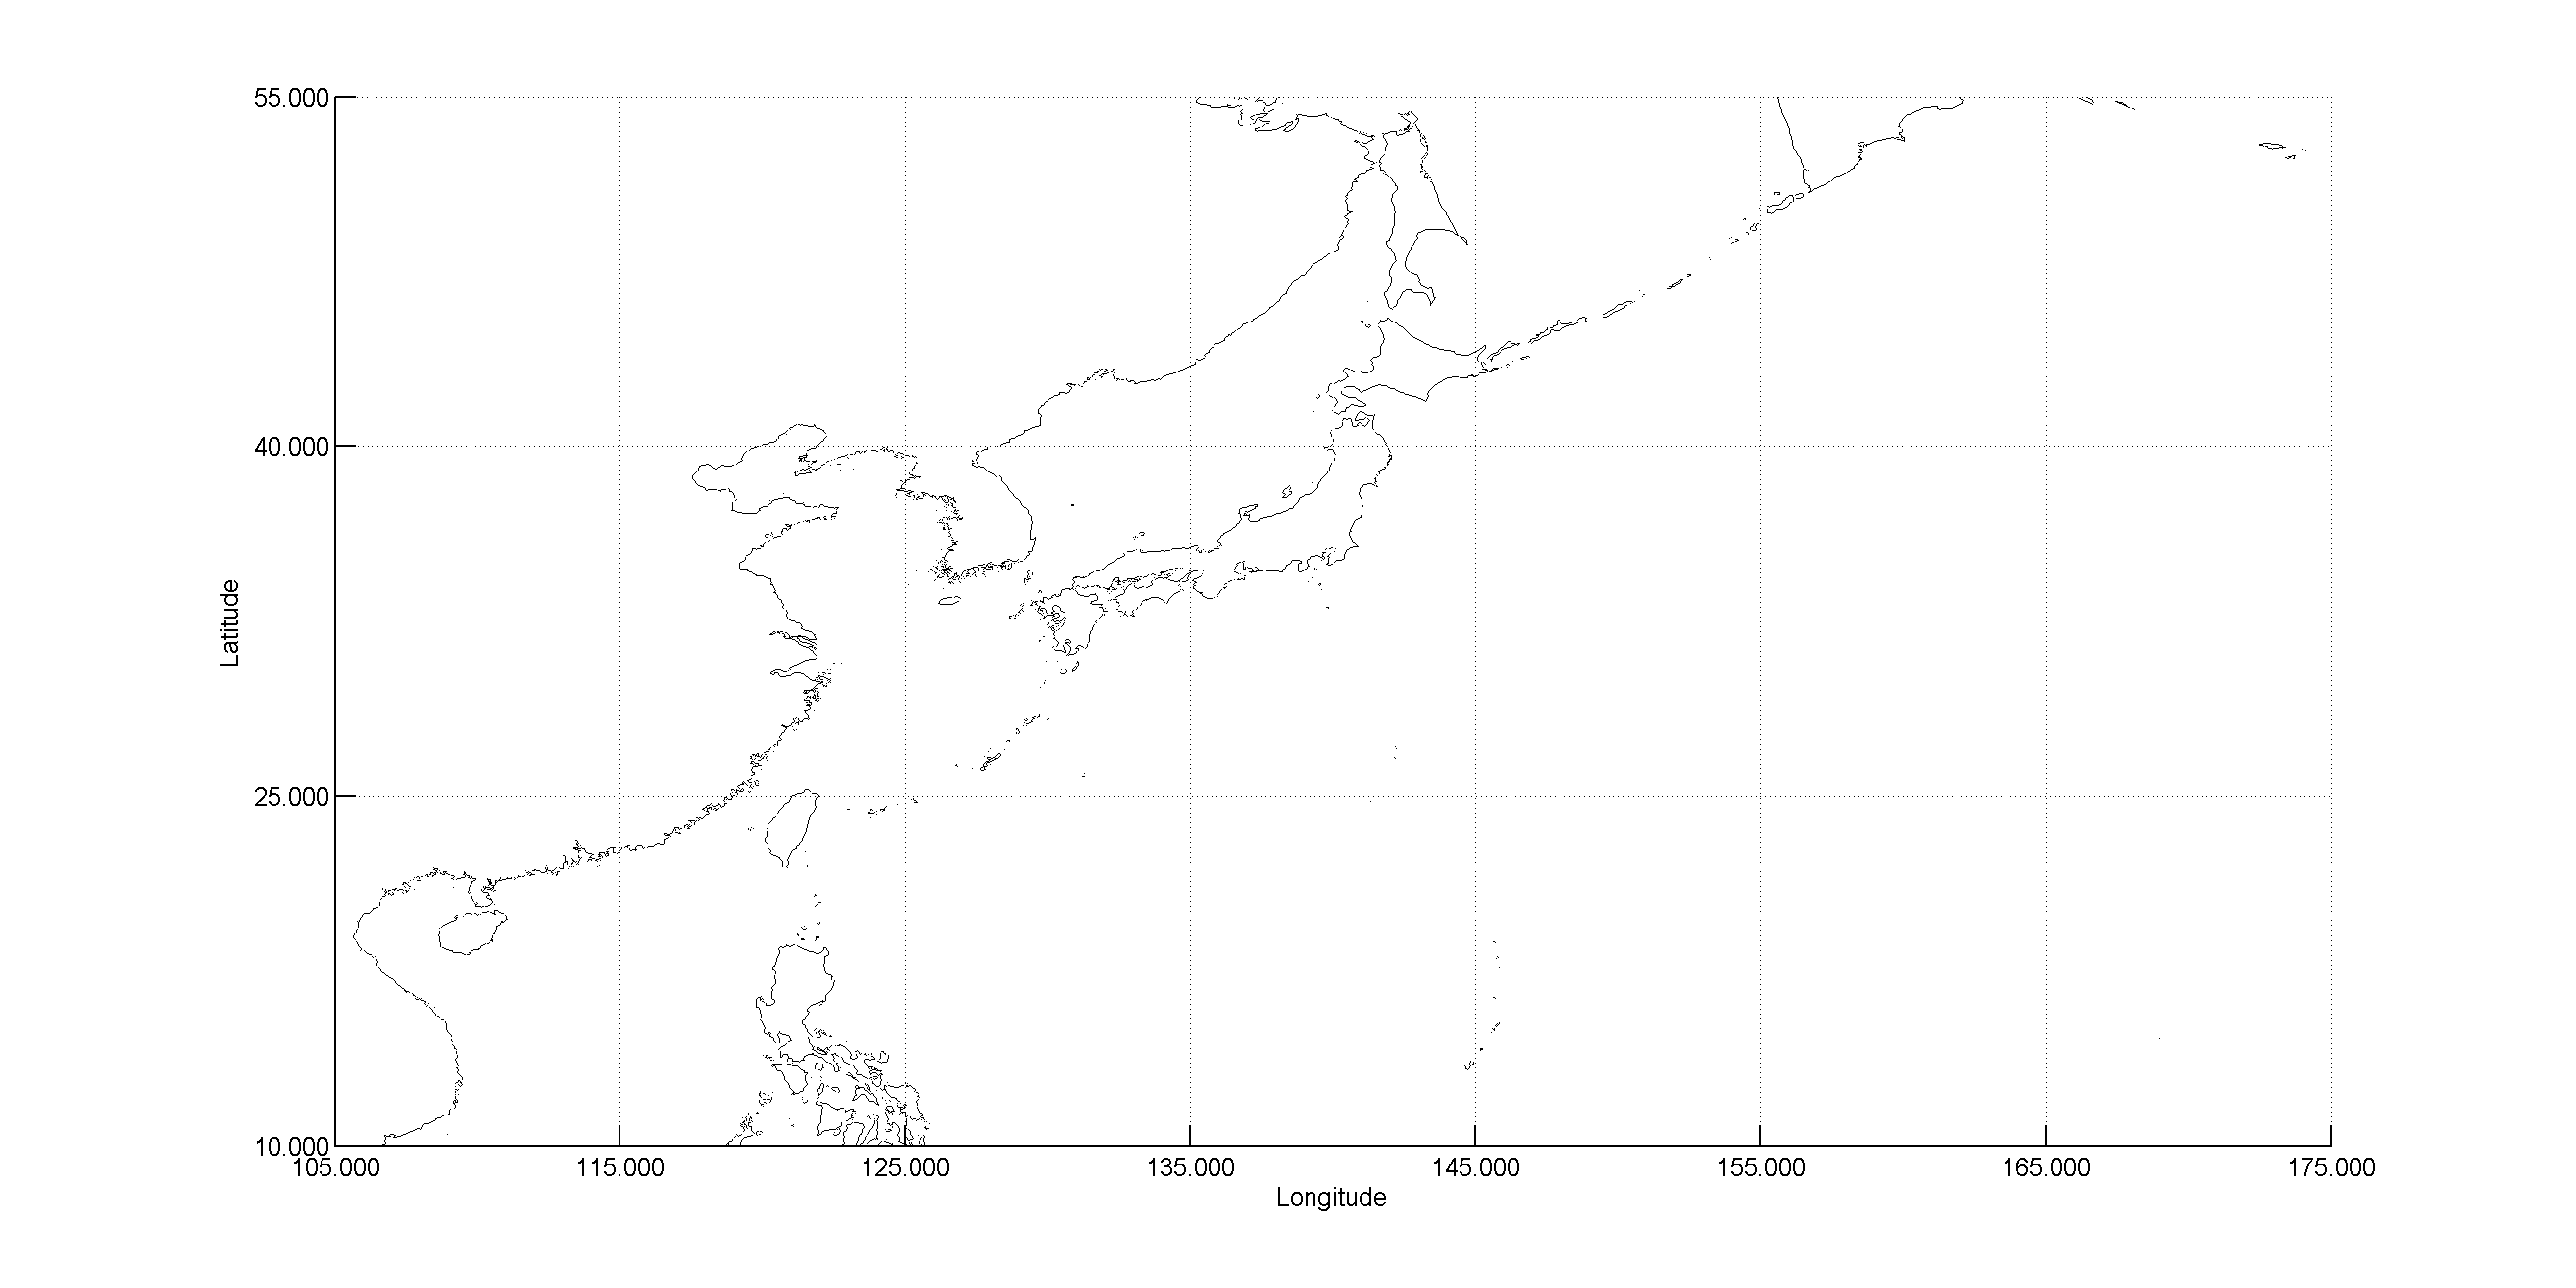 CYCLE_167 - Japan Ascending passes